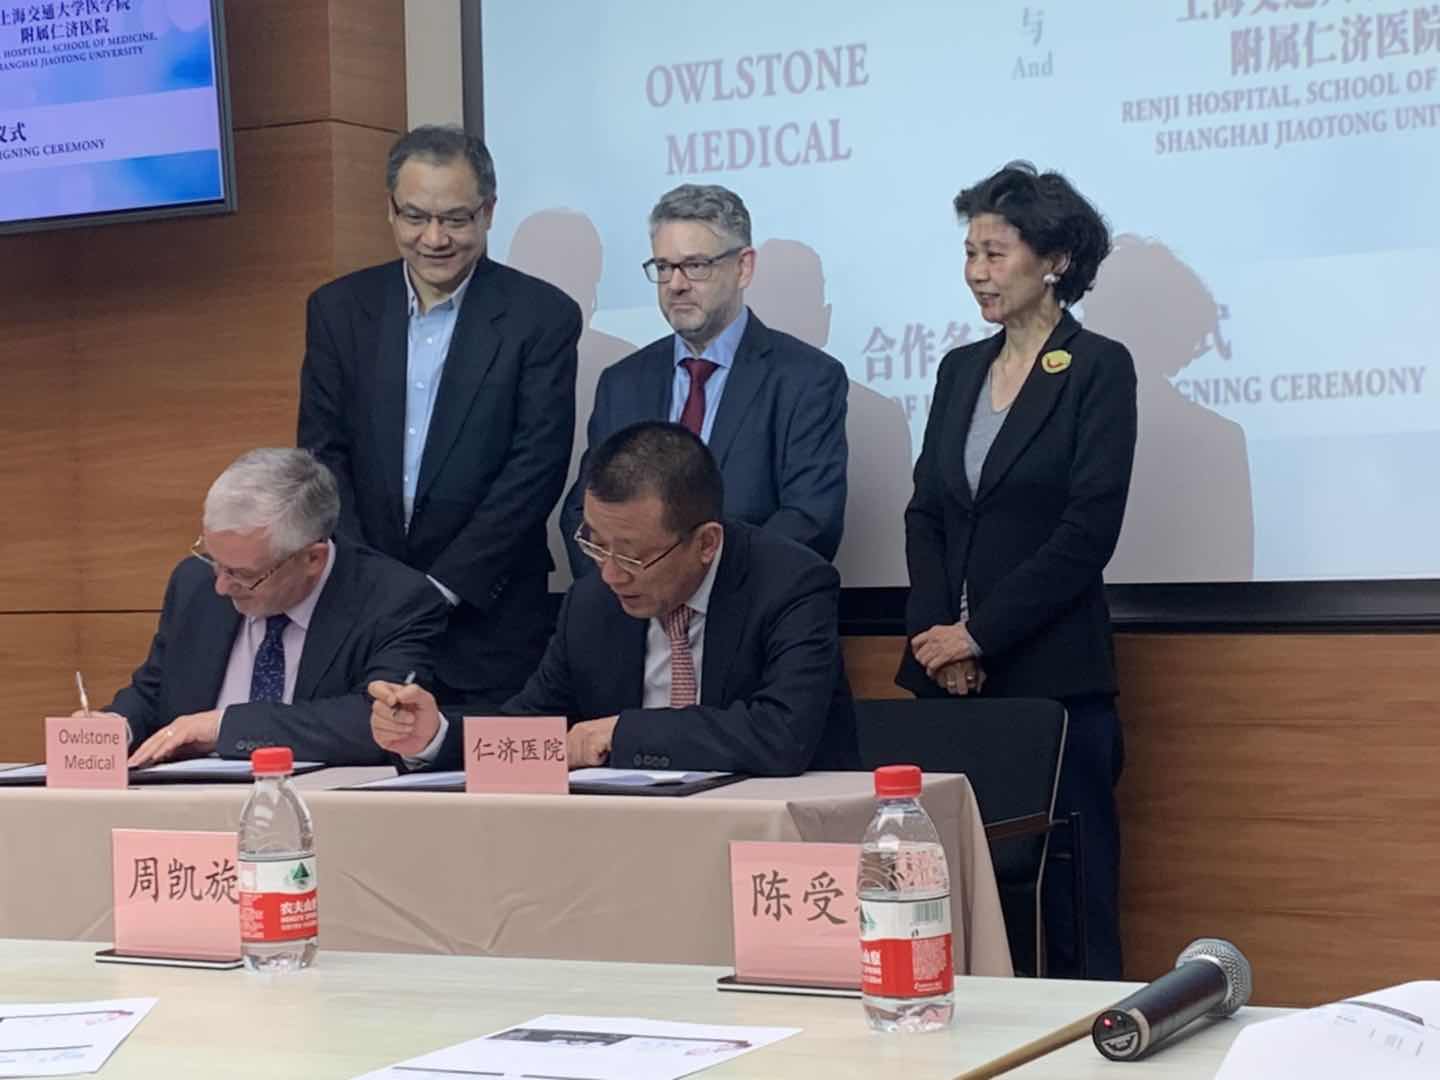 Memorandum of understanding between Owlstone Medical and Renji Hospital was signed on February 18, 2019 in Shanghai, China